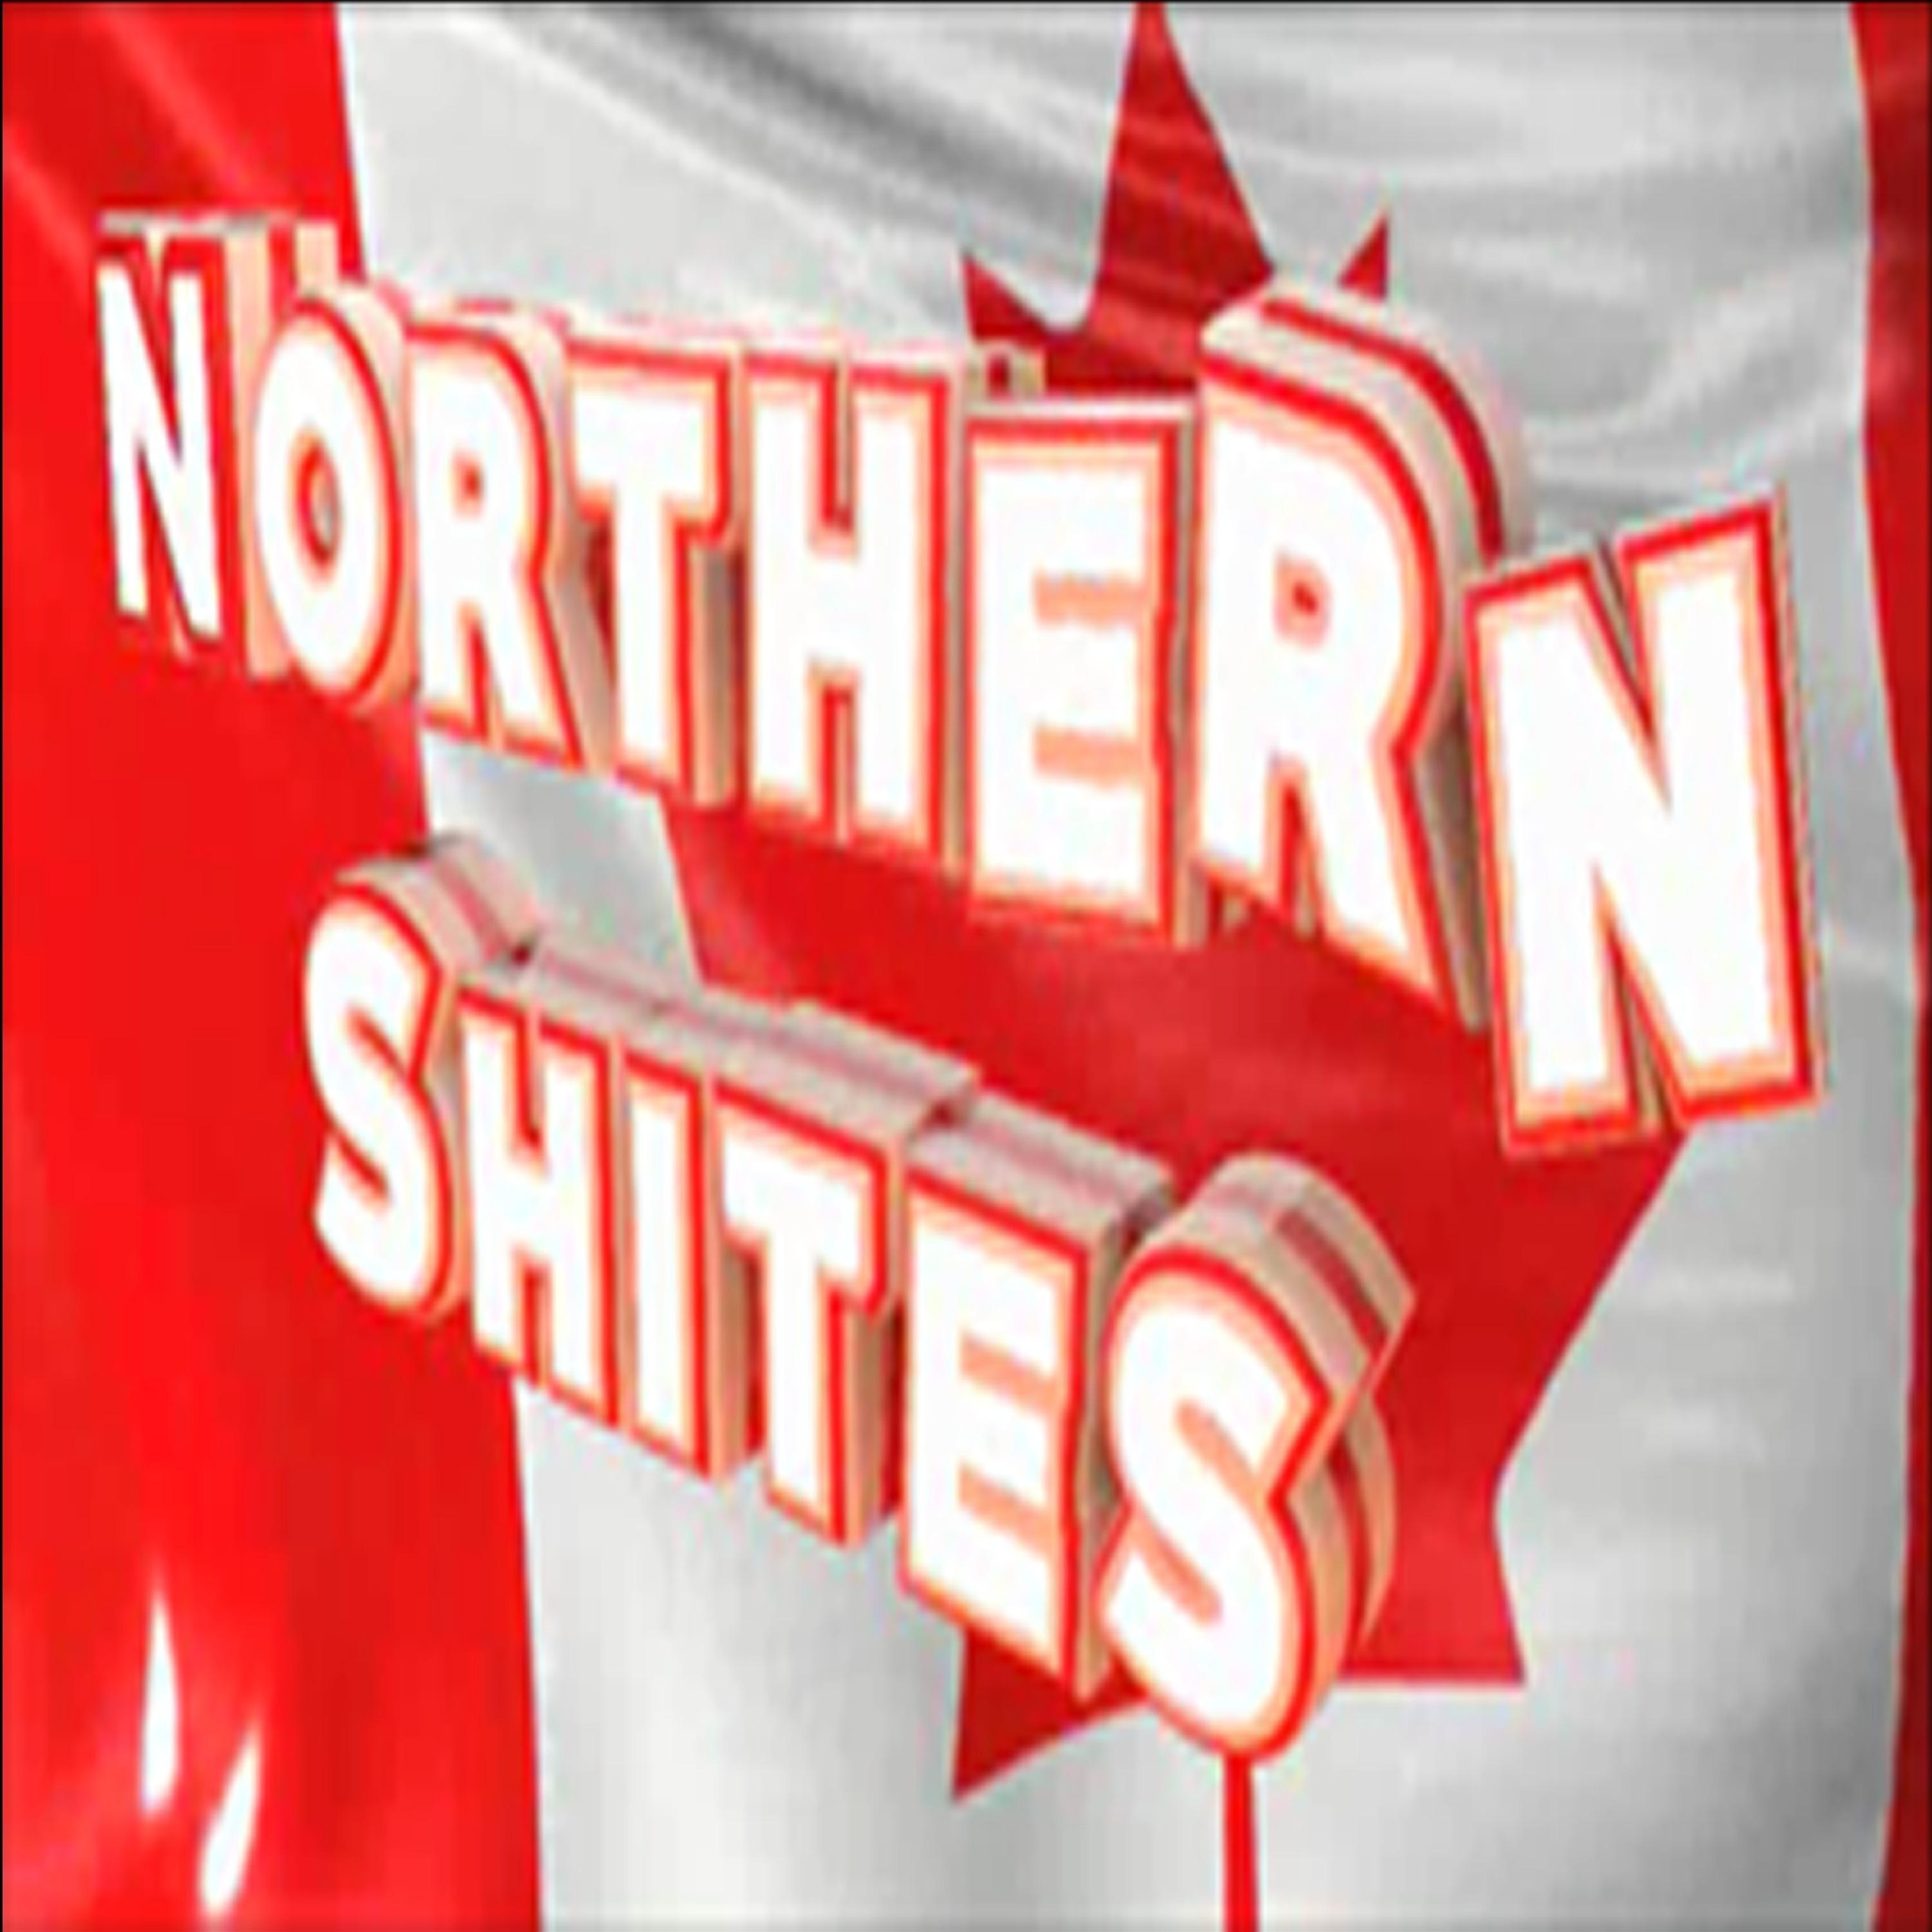 Northern Shites